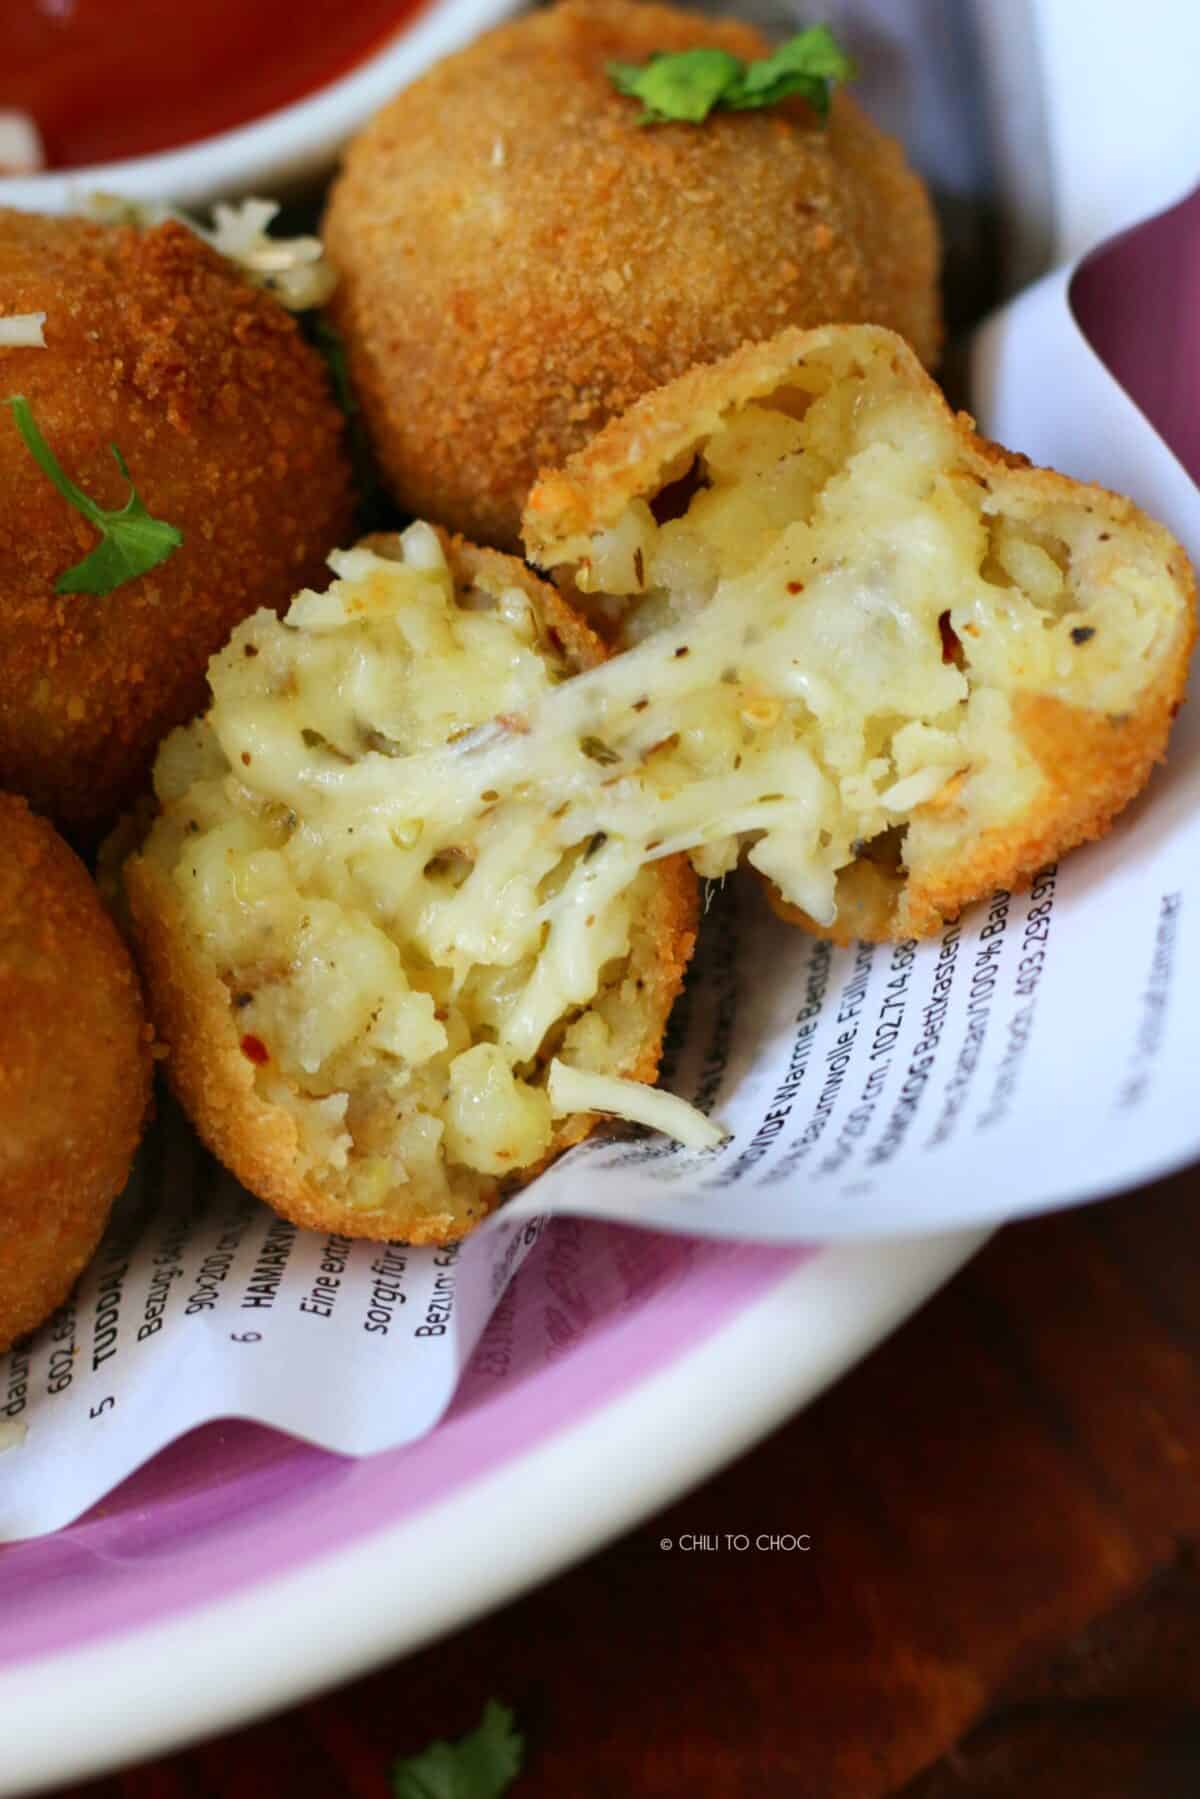 Gooey center of potato and cheese ball